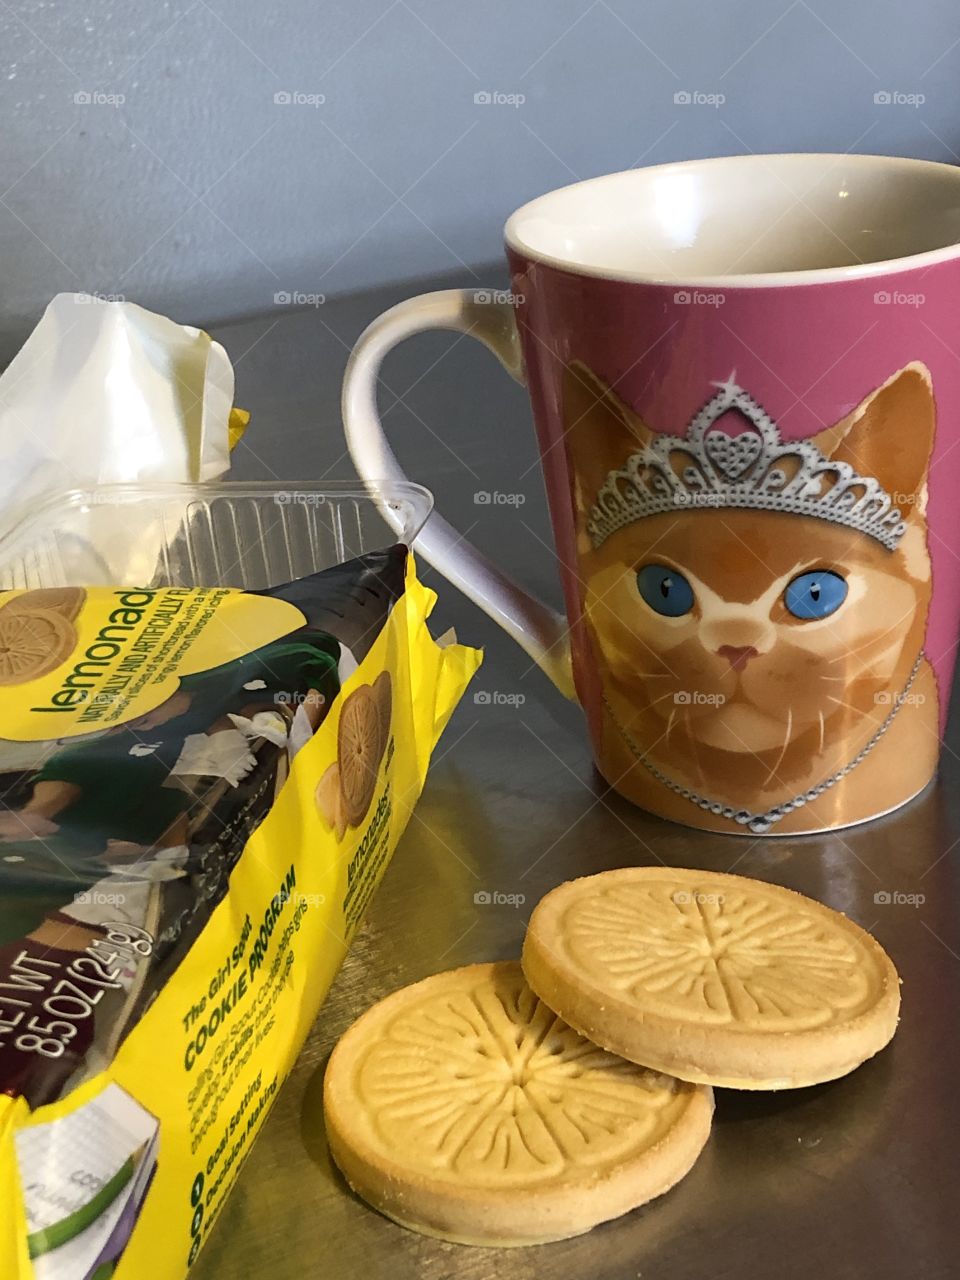 Lemonaid Girl Scout cookies and a cuppa tea